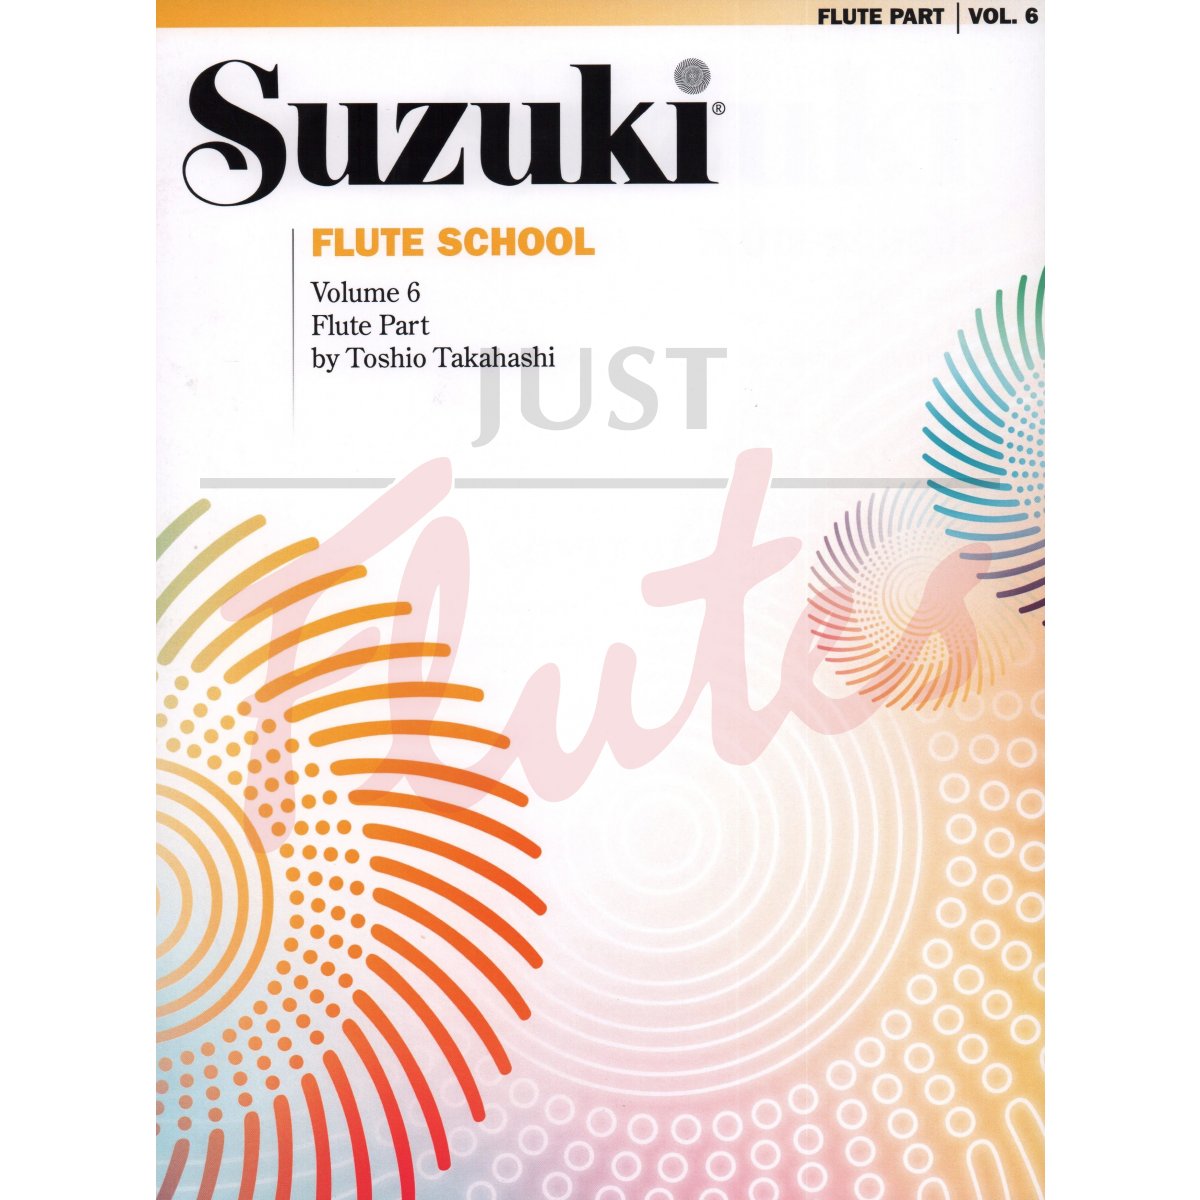 Suzuki Flute School Vol 6 [Flute Part]